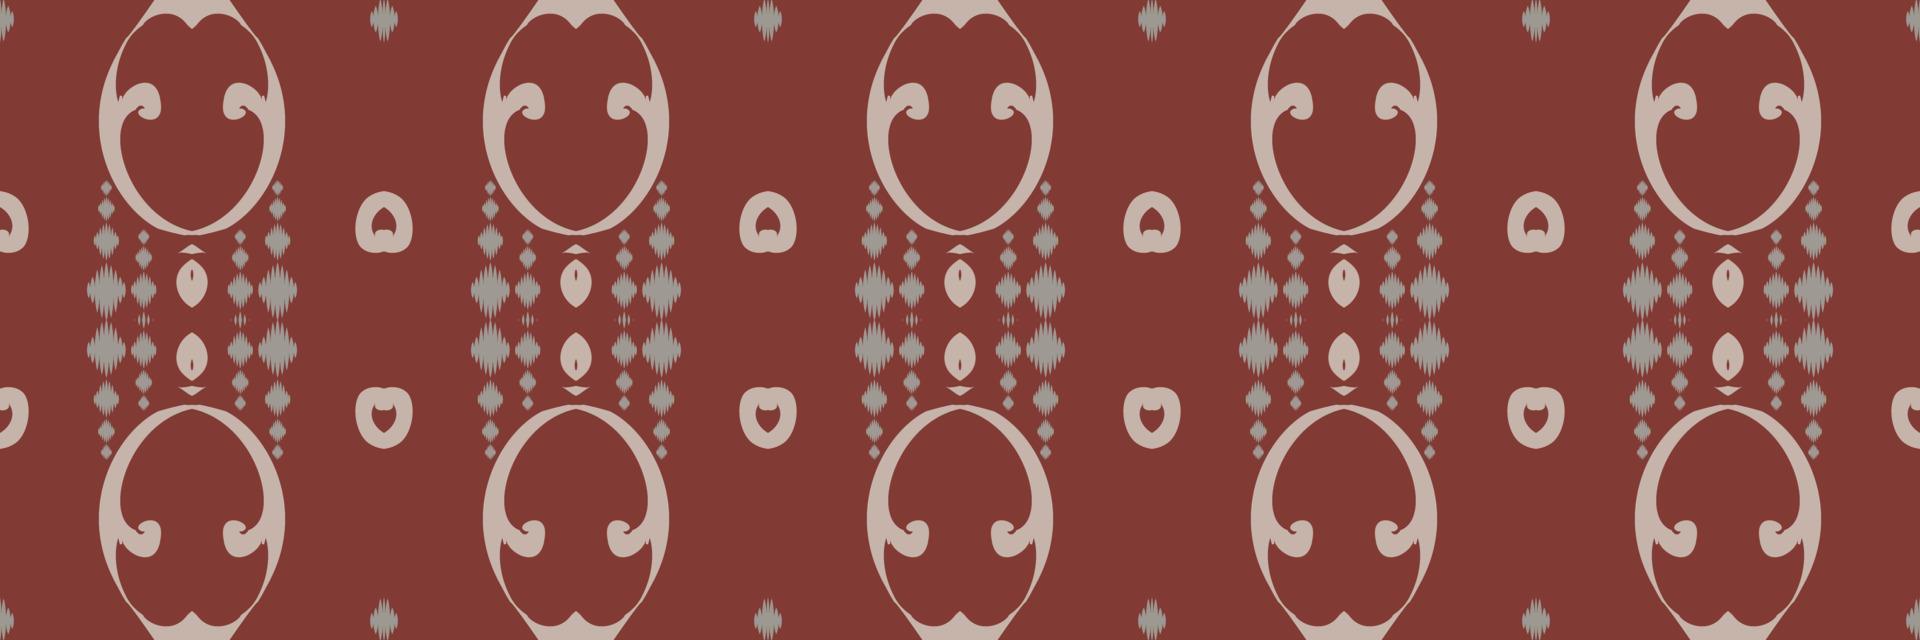 ikkat o ikat flor batik textil patrón sin costuras diseño vectorial digital para imprimir saree kurti borneo borde de tela símbolos de pincel muestras ropa de fiesta vector